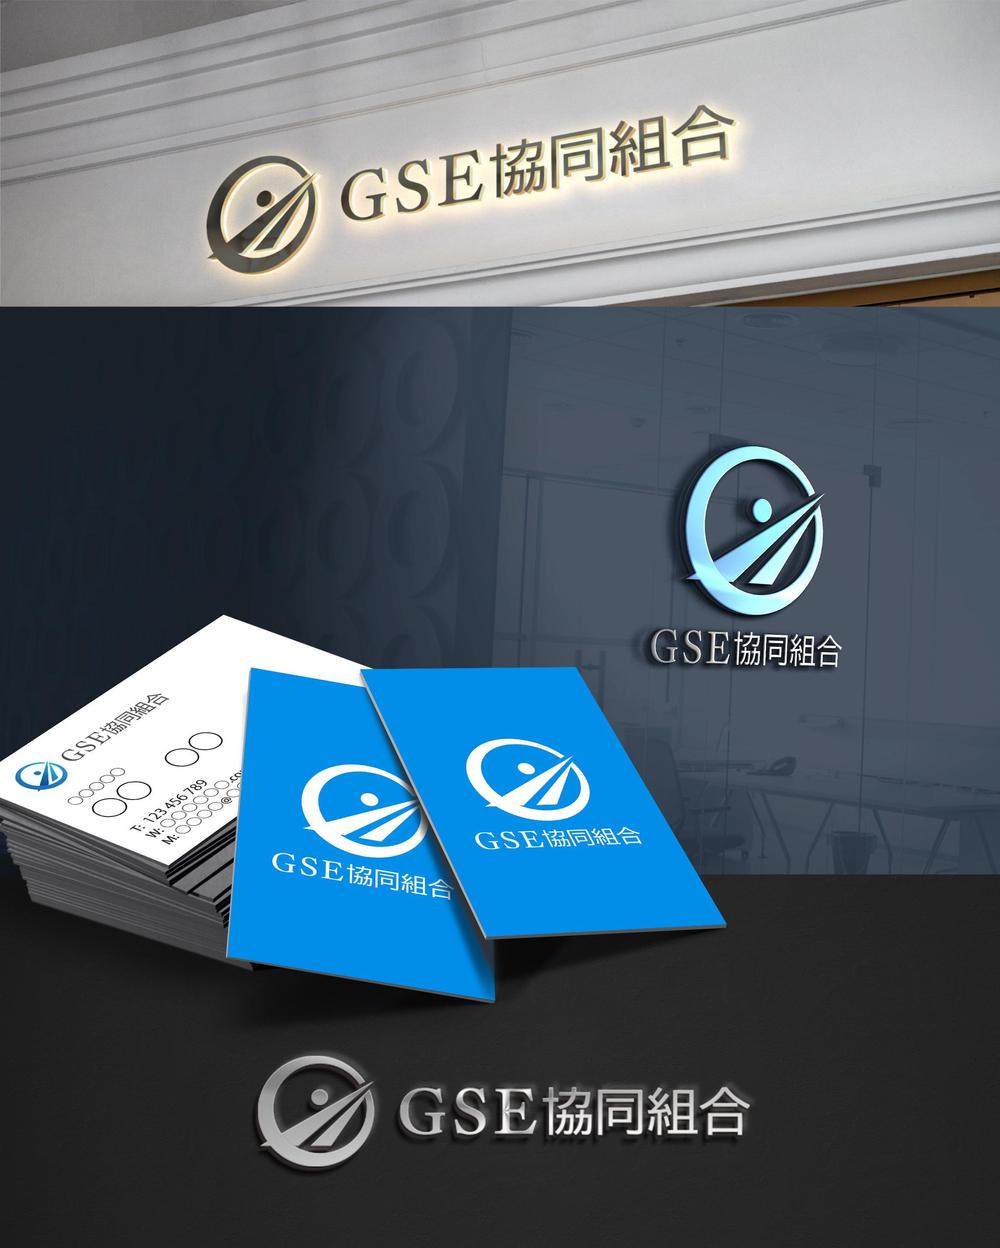 GSE協同組合-2.jpg